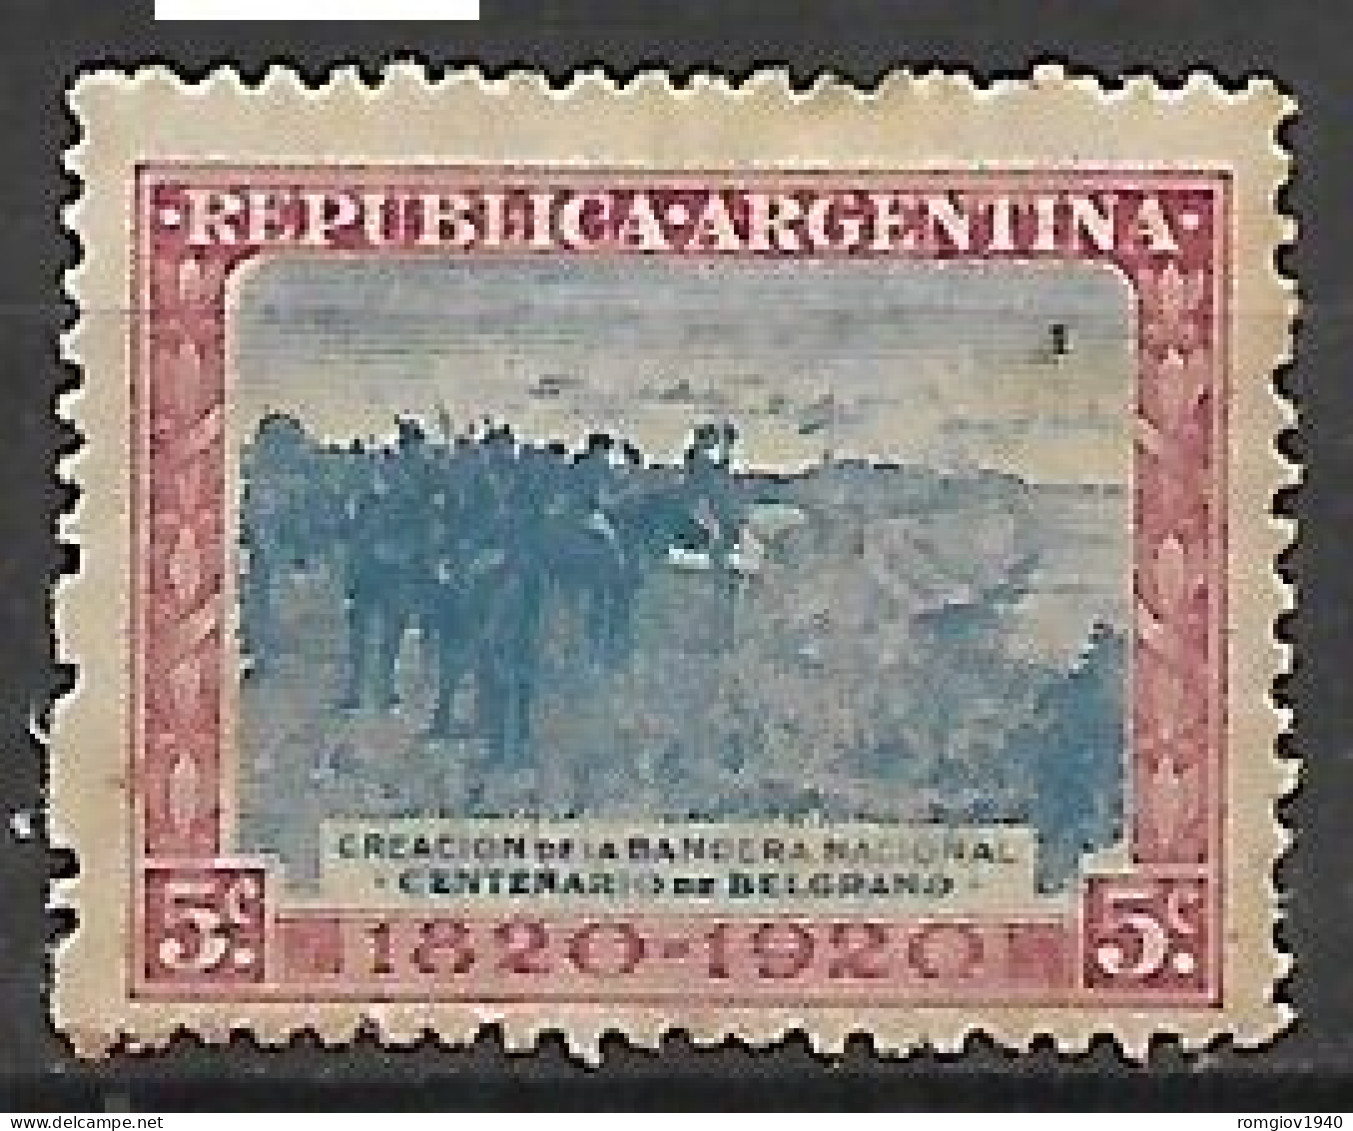 ARGENTINA  1920  CENTENARIO DELLA  MORTE DEL GENERALE MANUEL BELGRANO  YVERT. 253 MLH VF - Ungebraucht